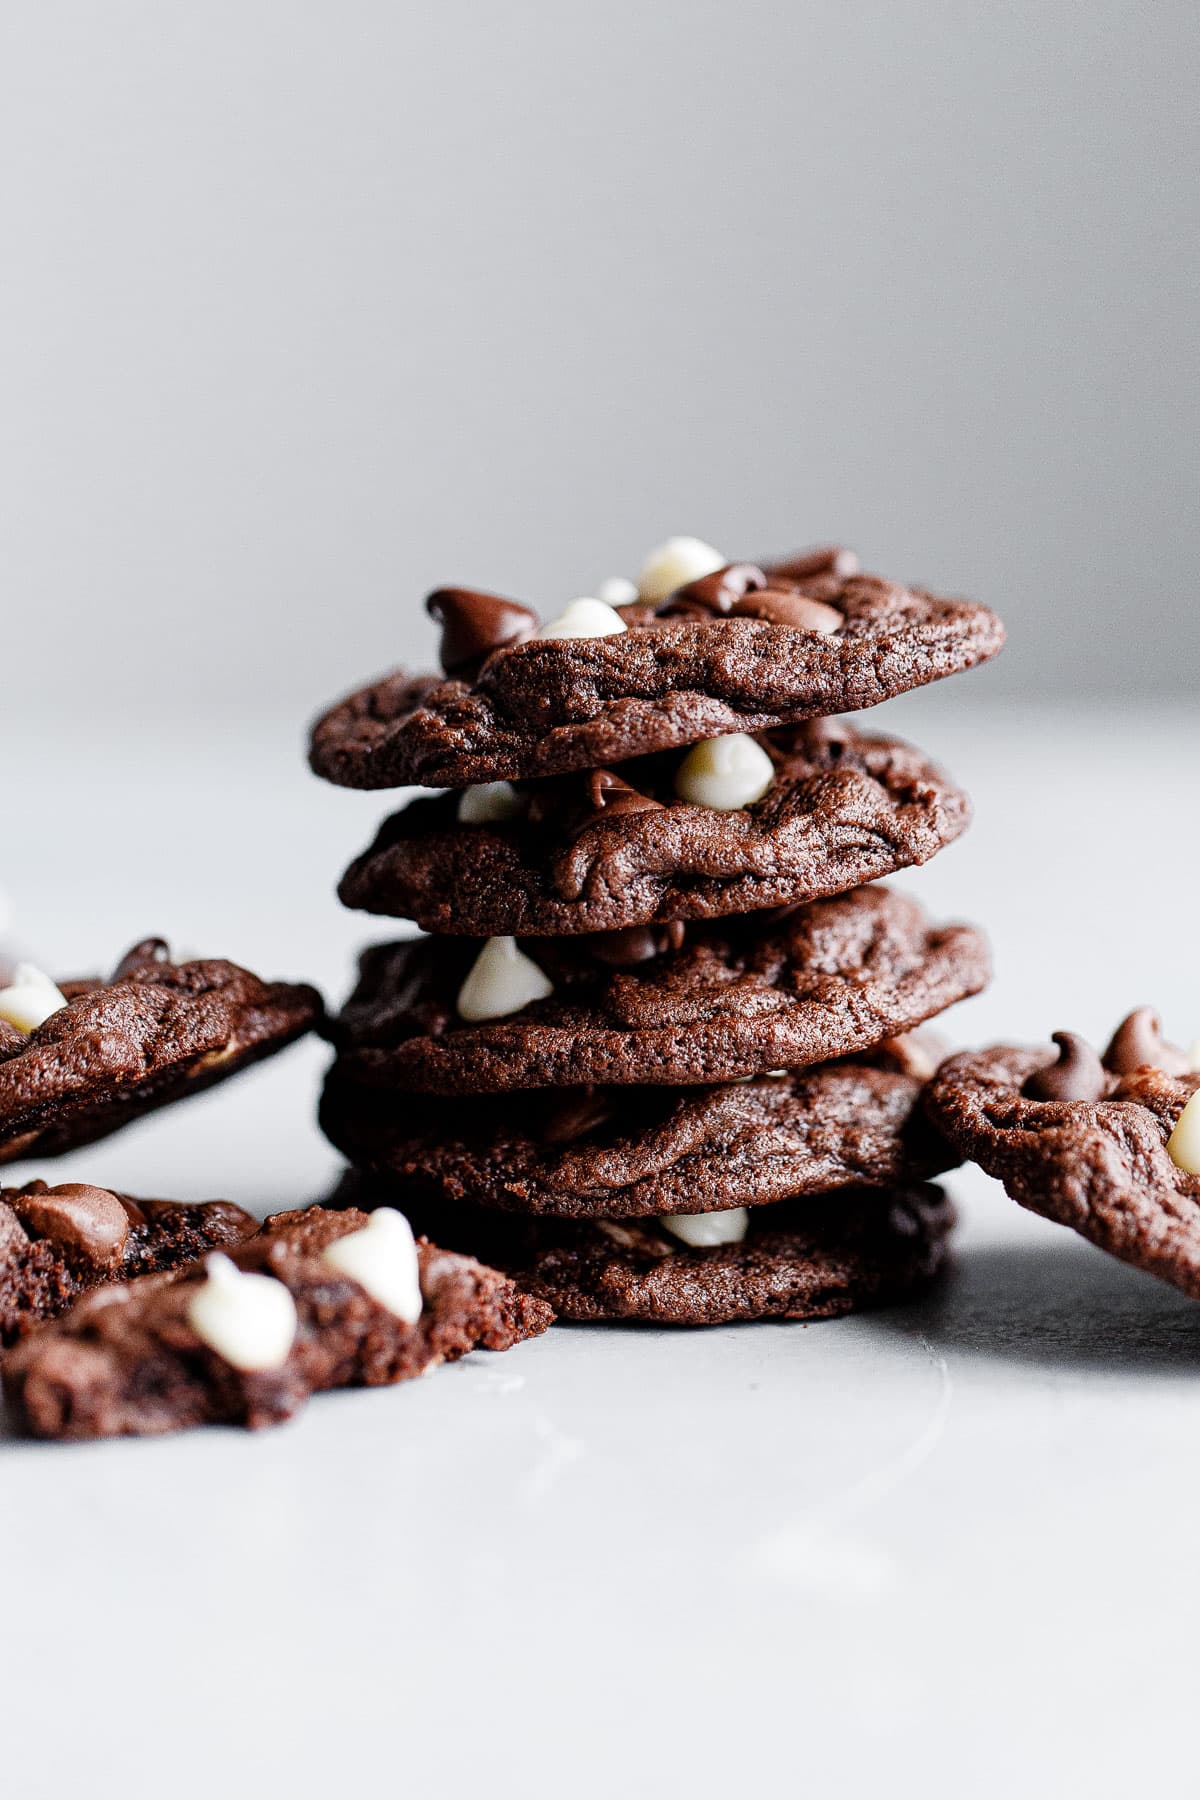 https://www.abeautifulplate.com/wp-content/uploads/2019/12/triple-chocolate-cookies-1-19.jpg